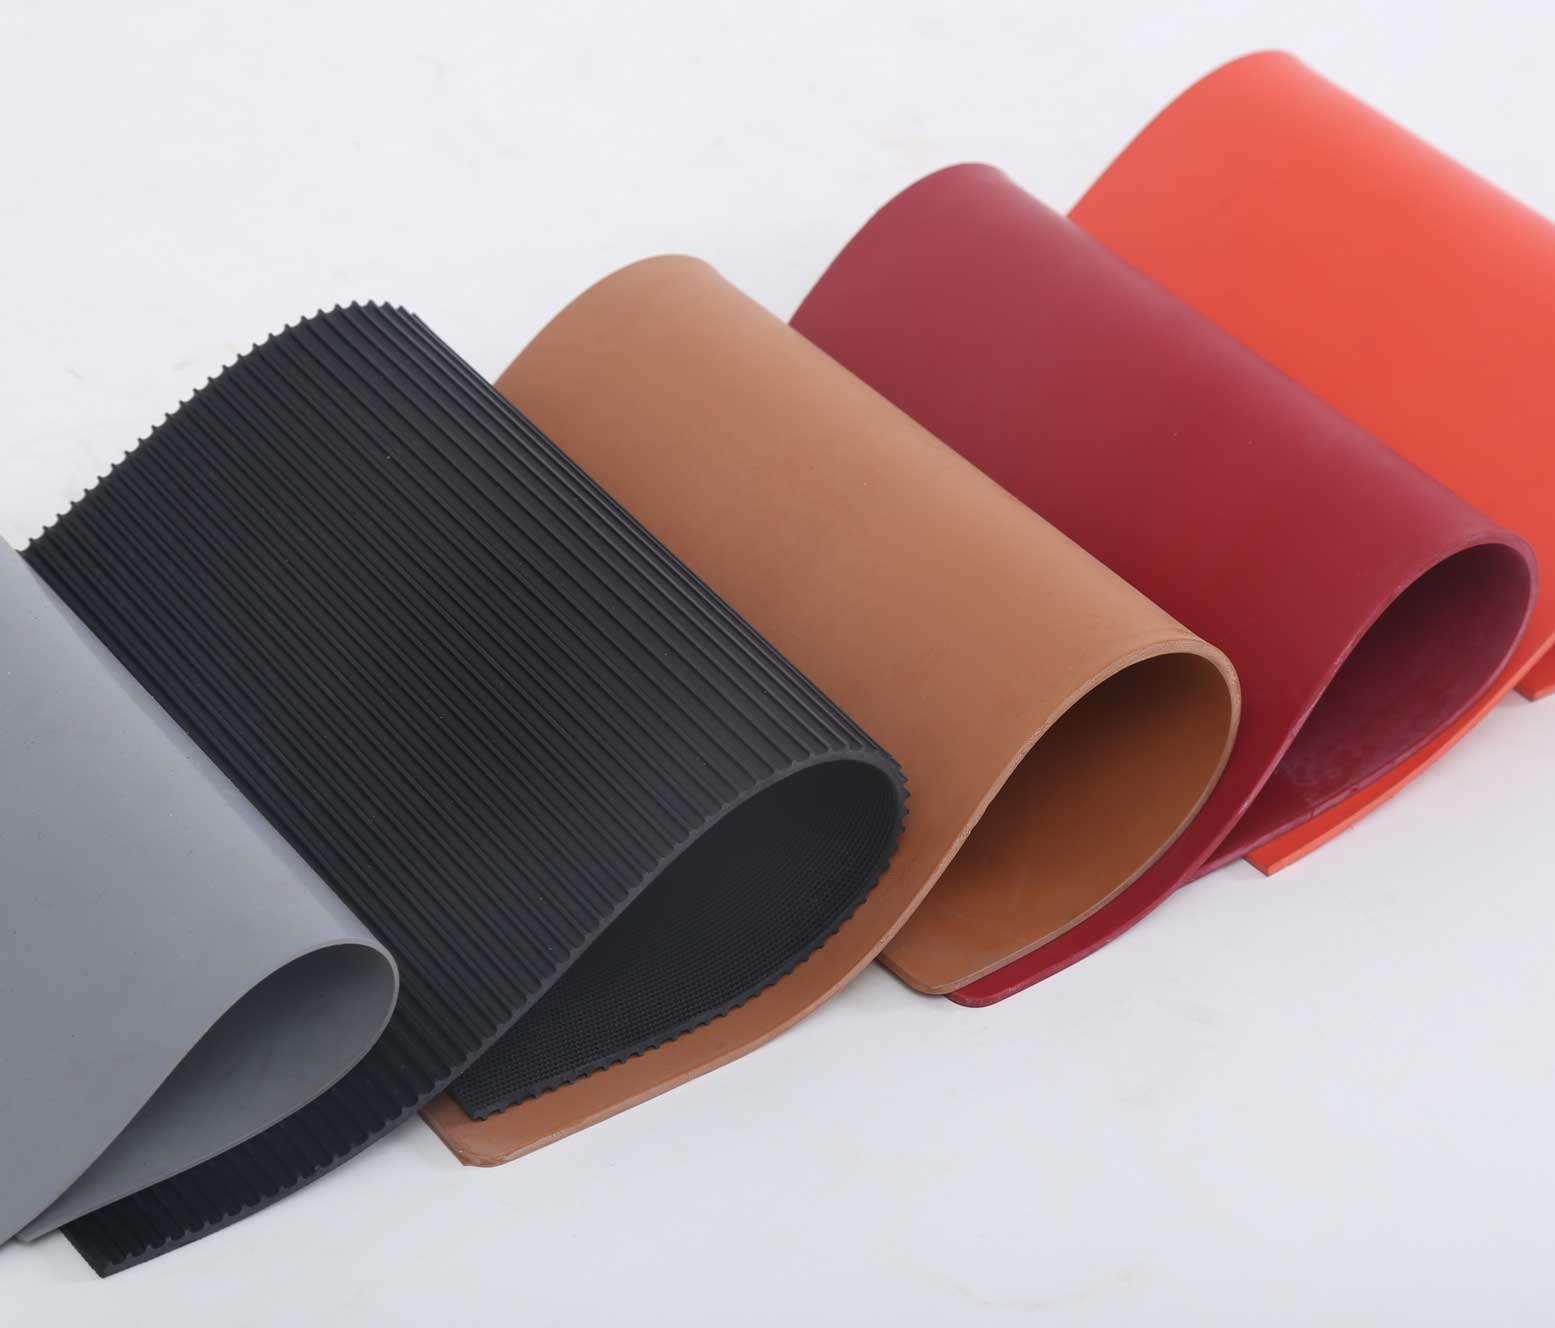 Estera de hoja de caucho natural de alta elasticidad personalizada de color